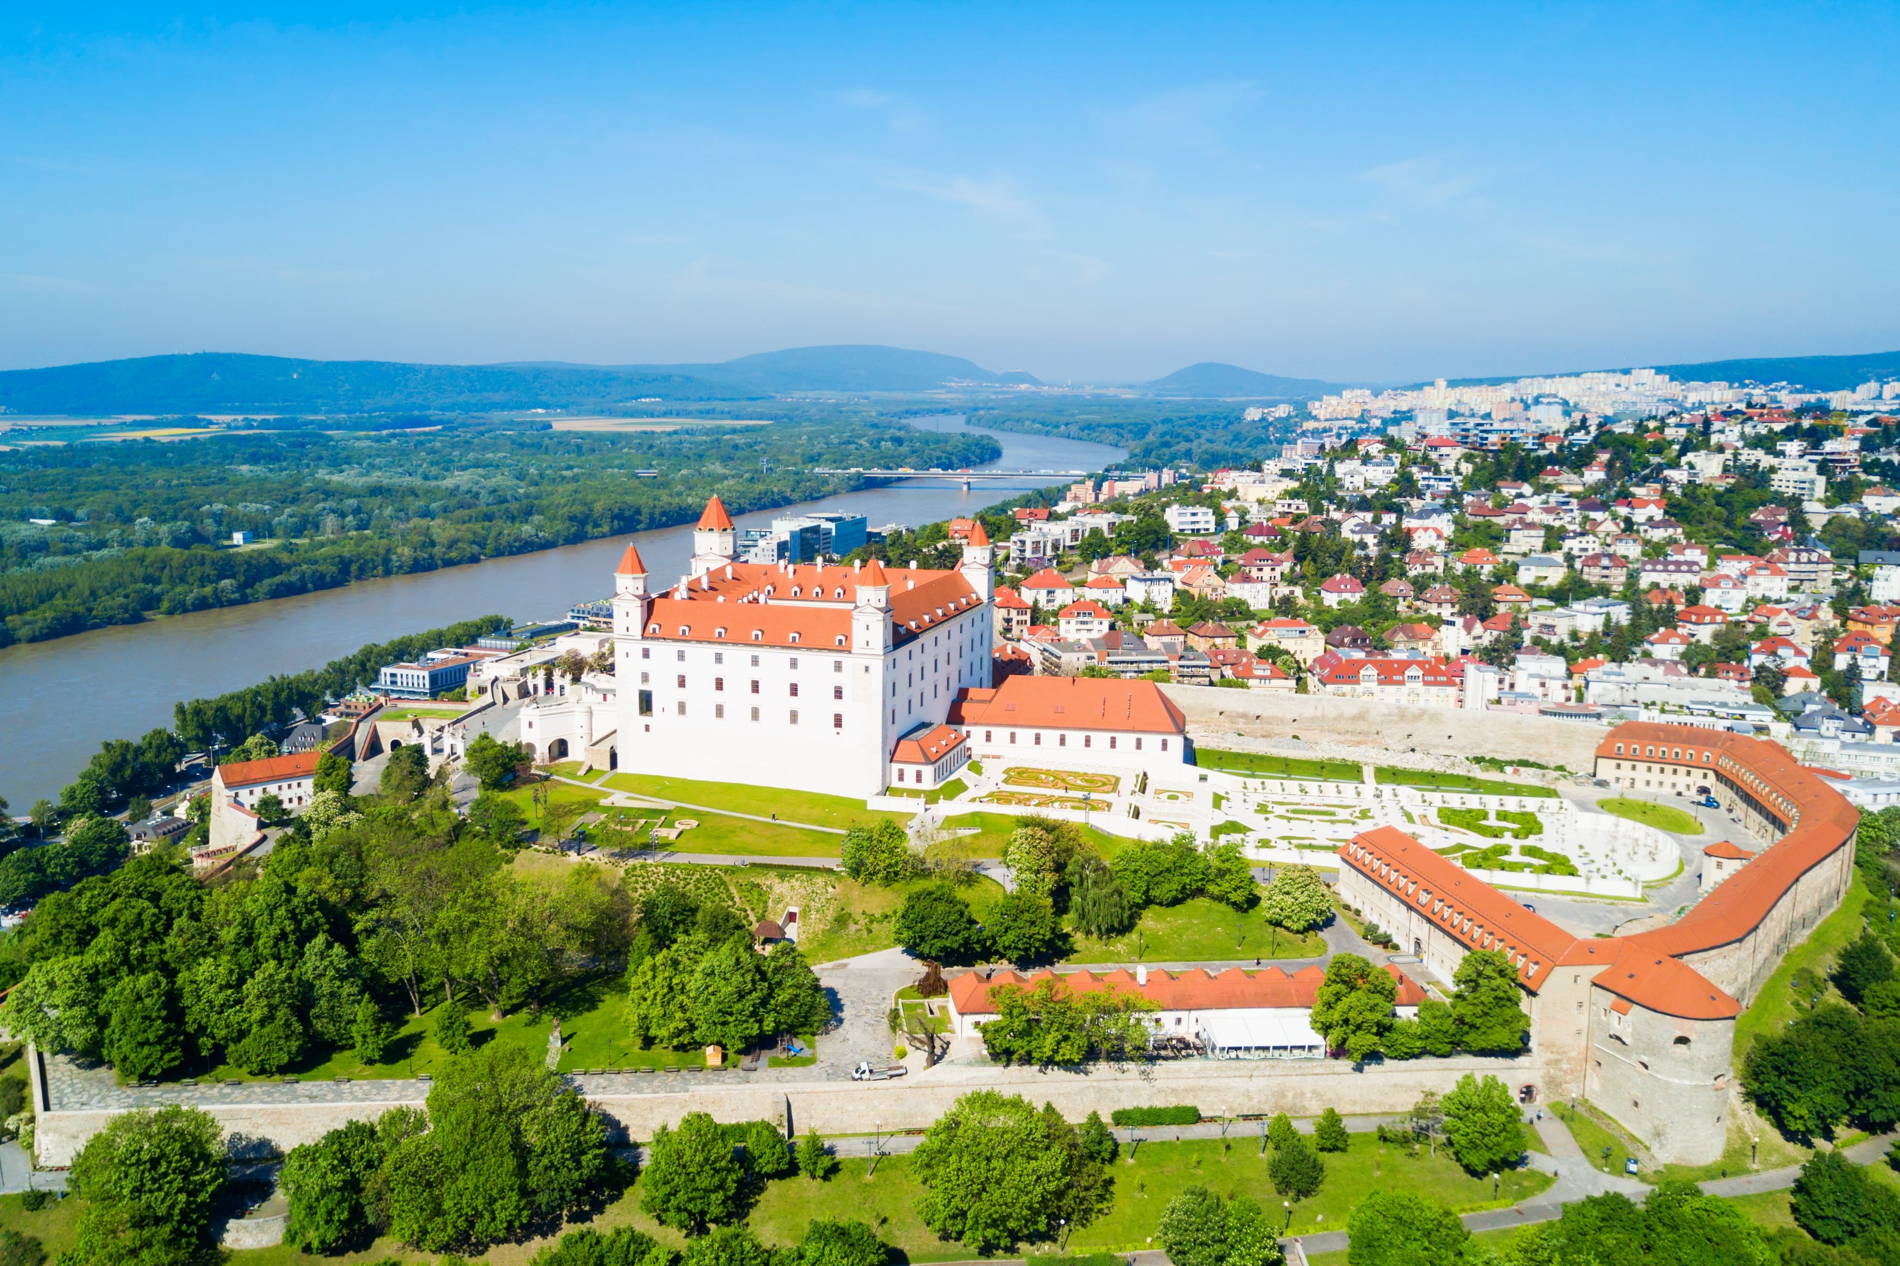 Bratislava view